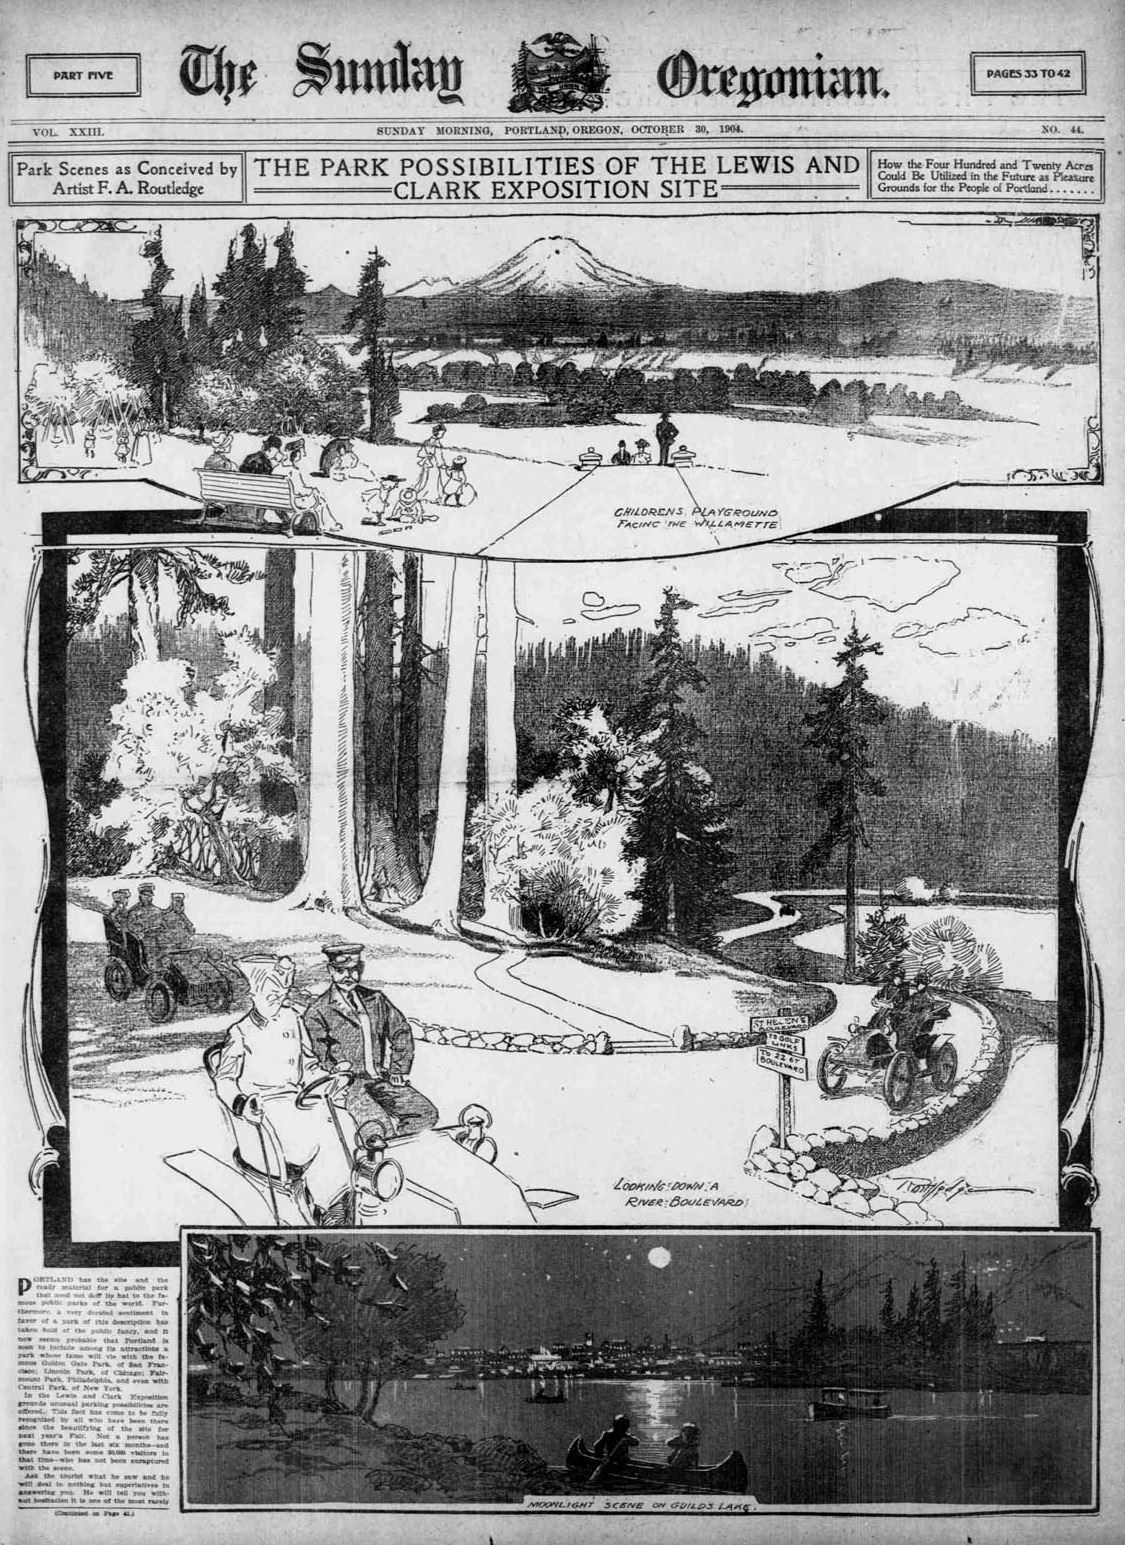 Lewis & Clark Expo Illustrations, 1904